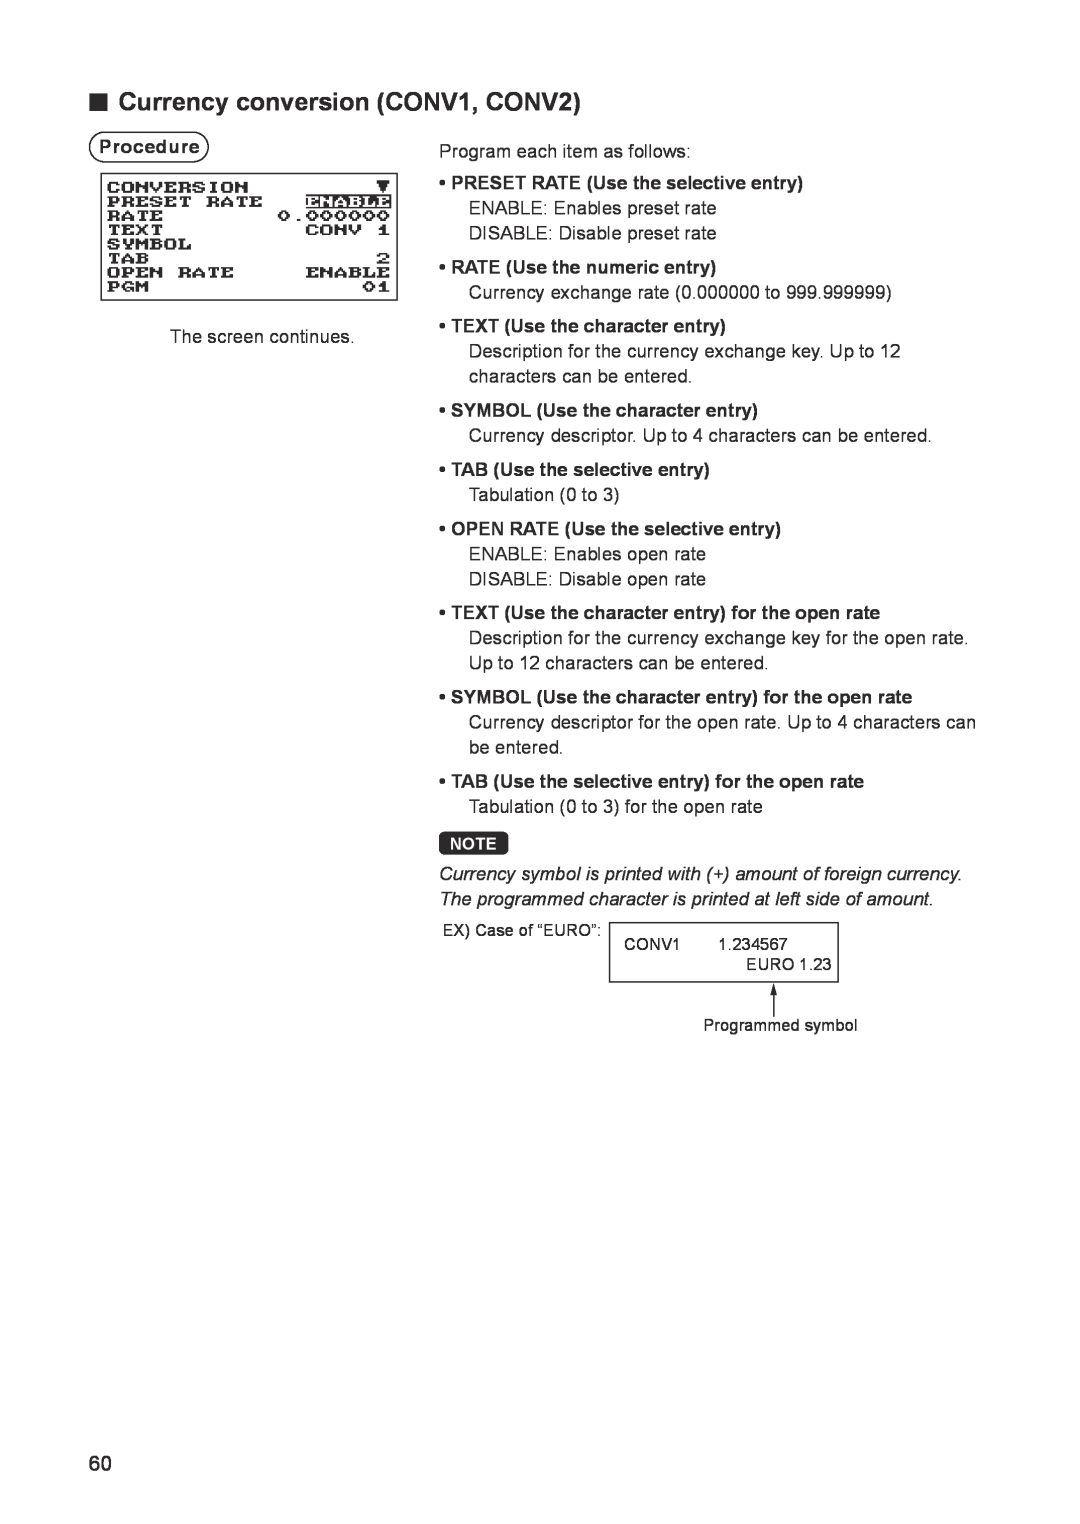 Sharp ER-A347A instruction manual Currency conversion CONV1, CONV2, EX Case of “EURO”, 1.234567, Euro, Programmed symbol 